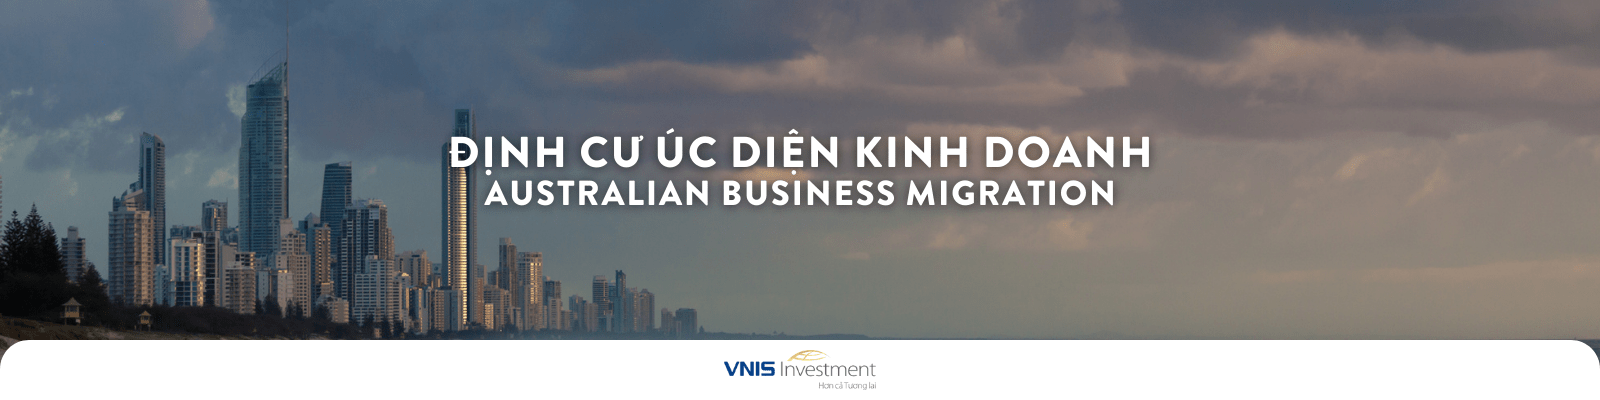 Australian Business Migration